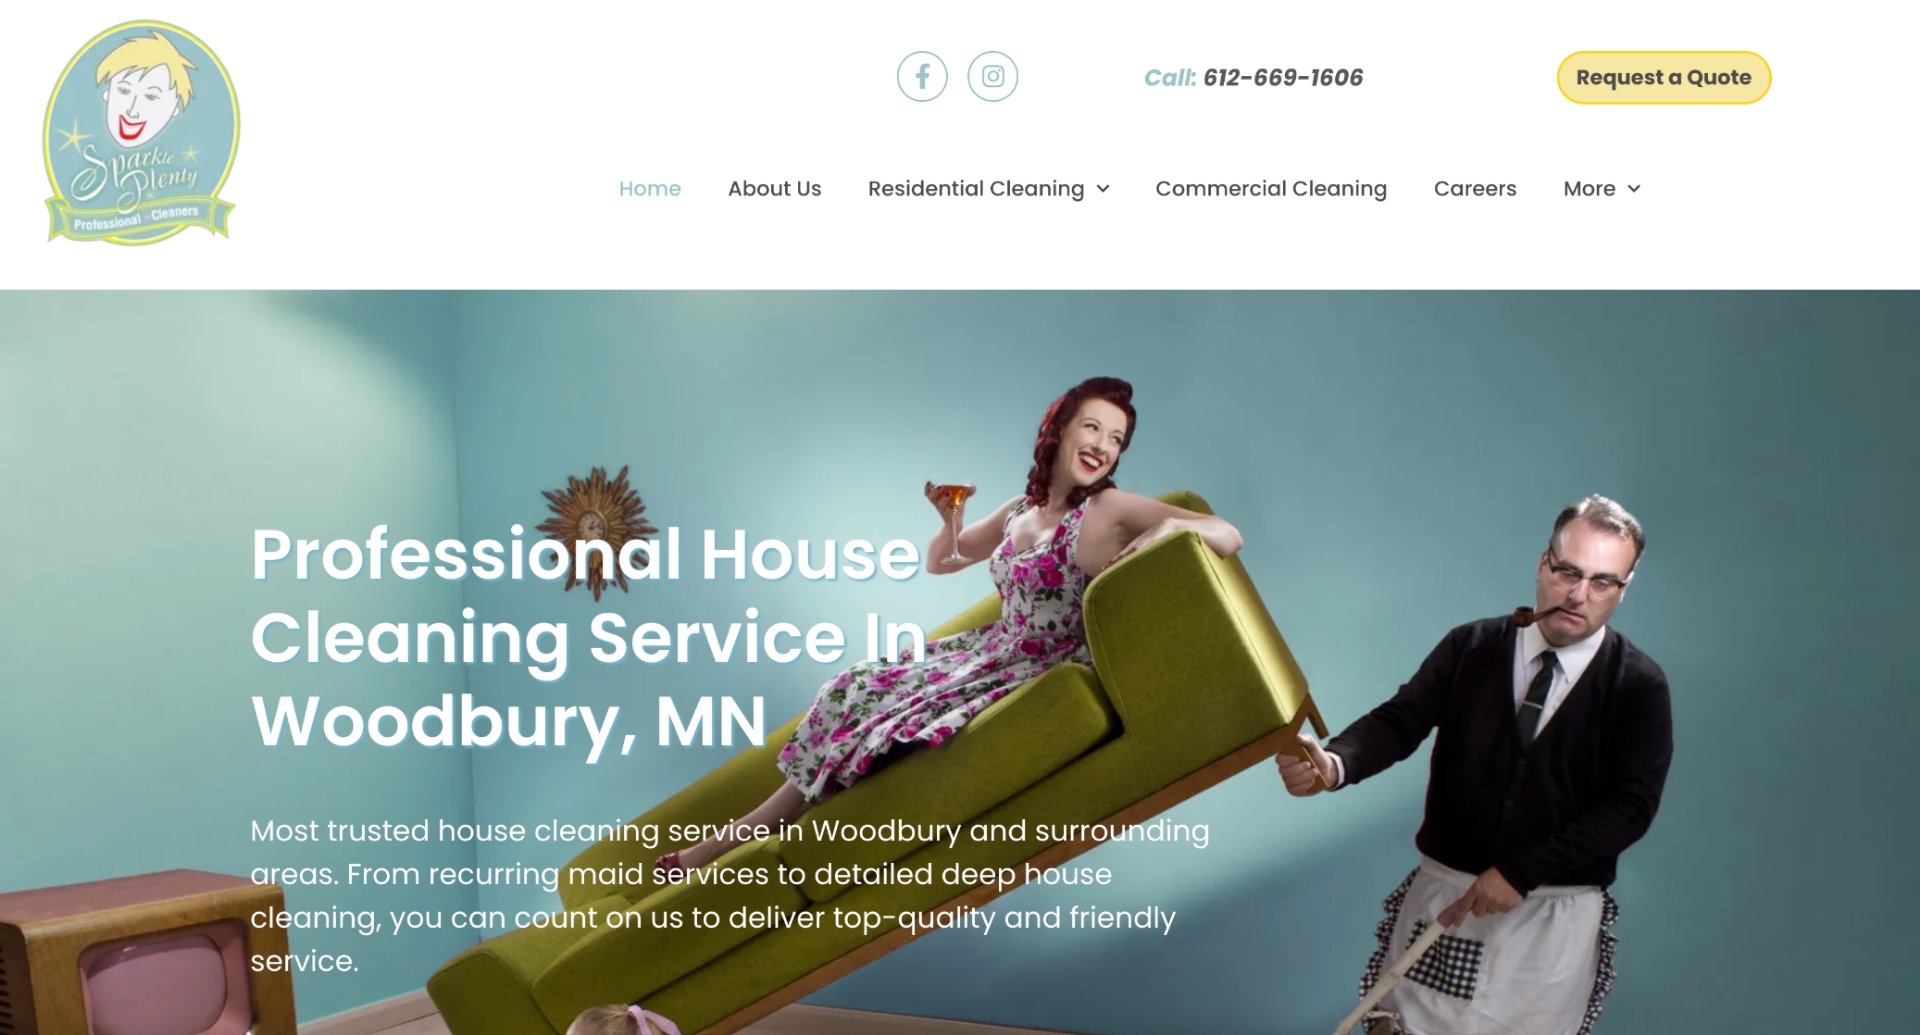 Minnesota Home Service Brands - Sparkle Plenty Cleaning Website